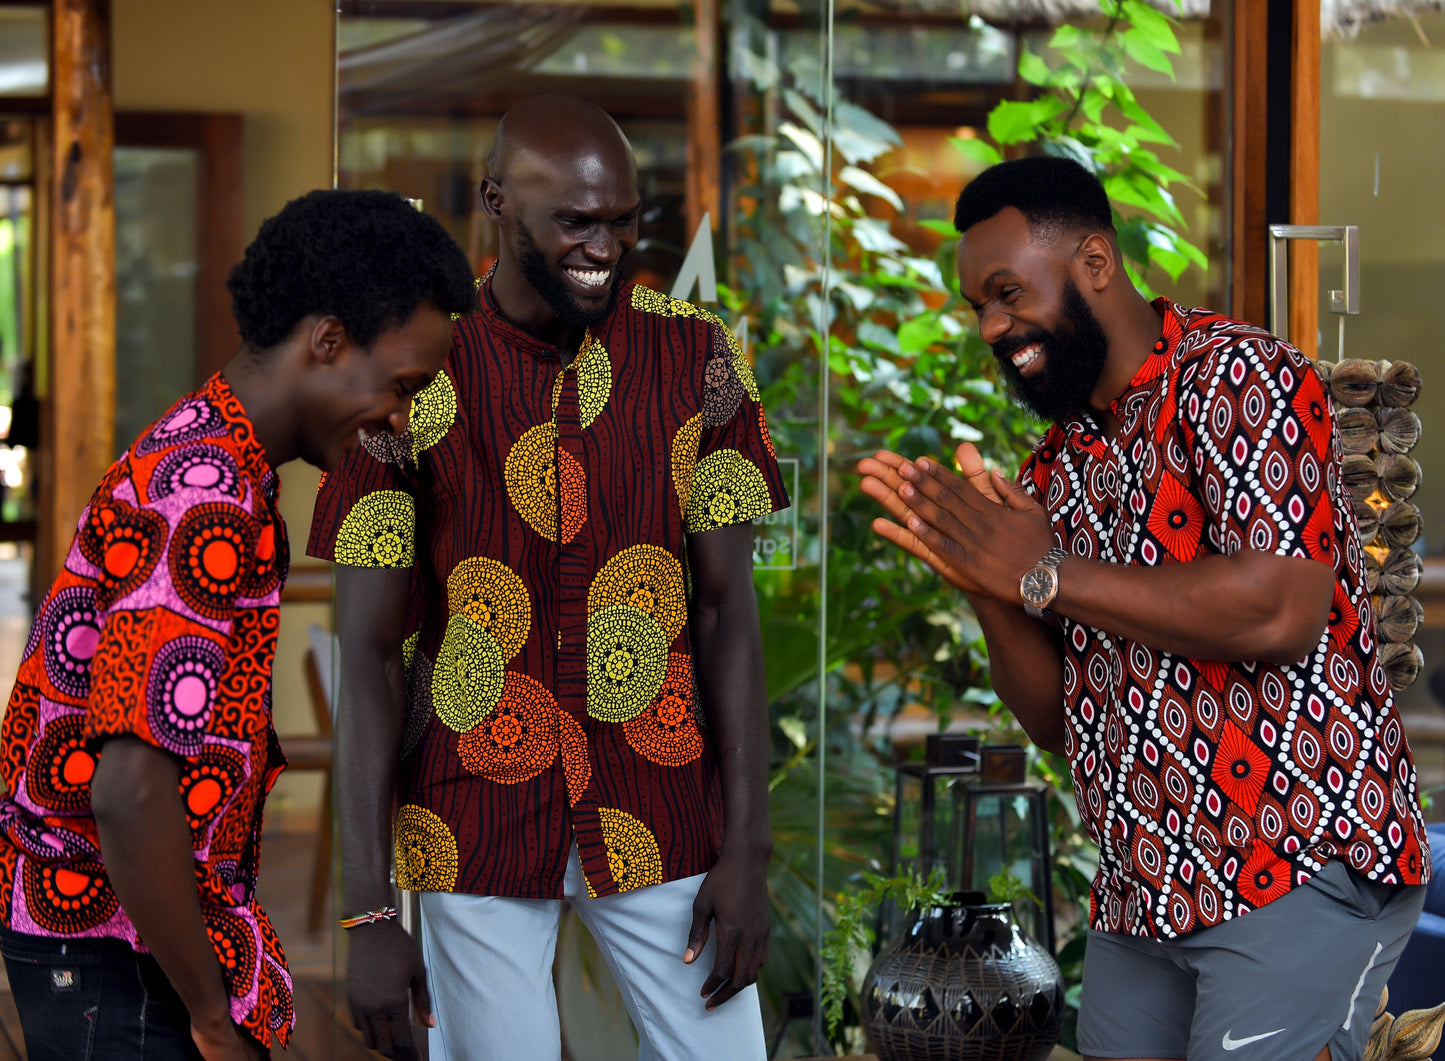 Veryldesigns Men’s African Print T-Shirt - Brown